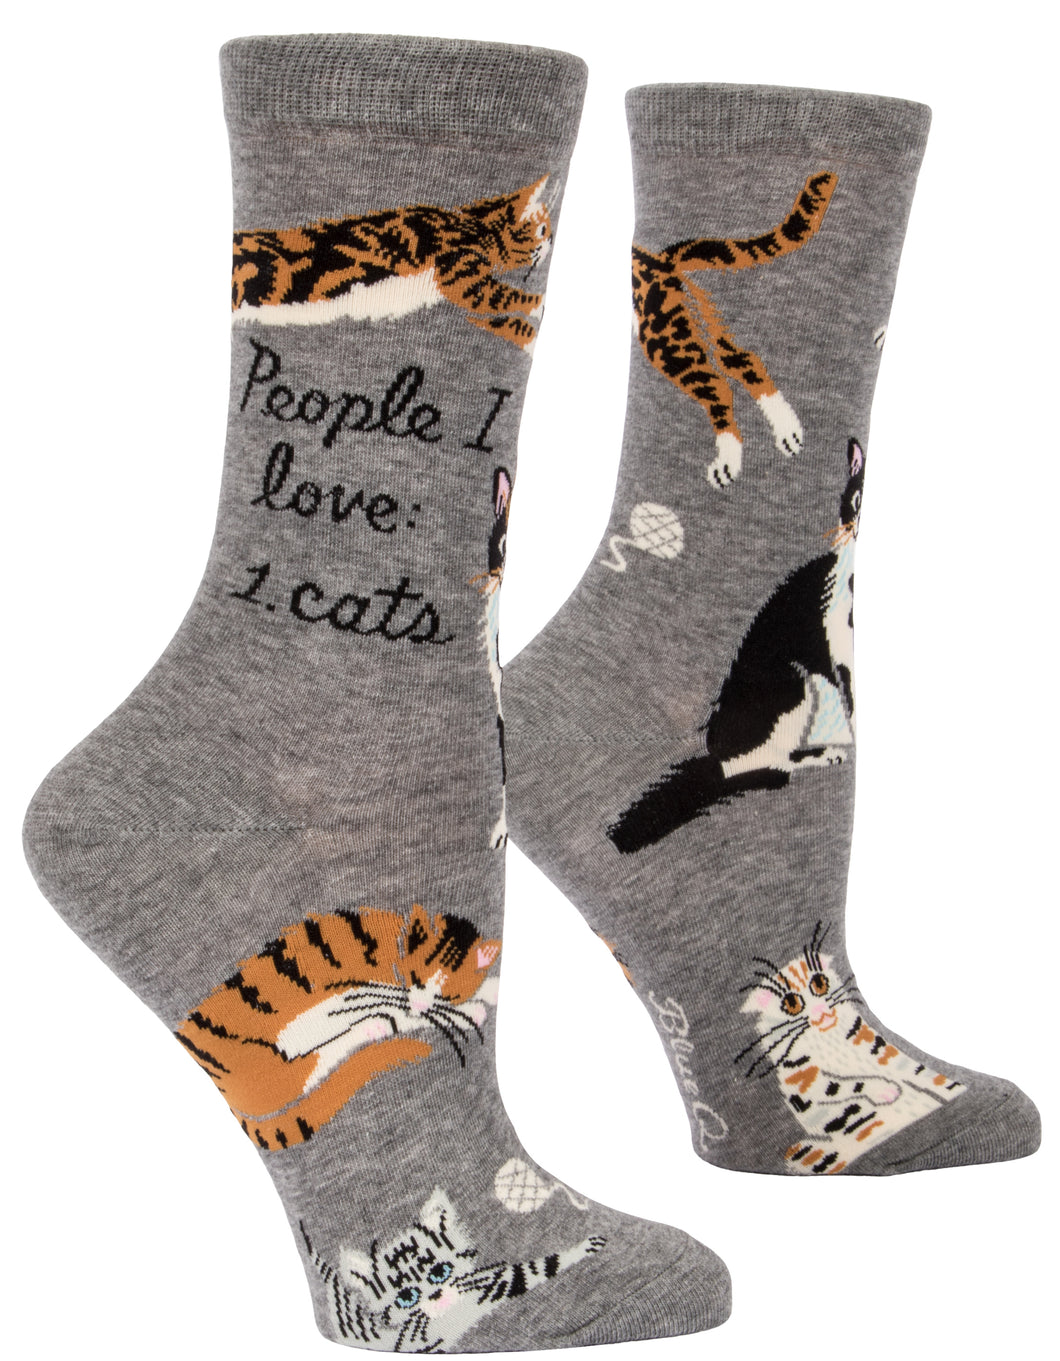 People I Love: Cats - Women's Crew Socks